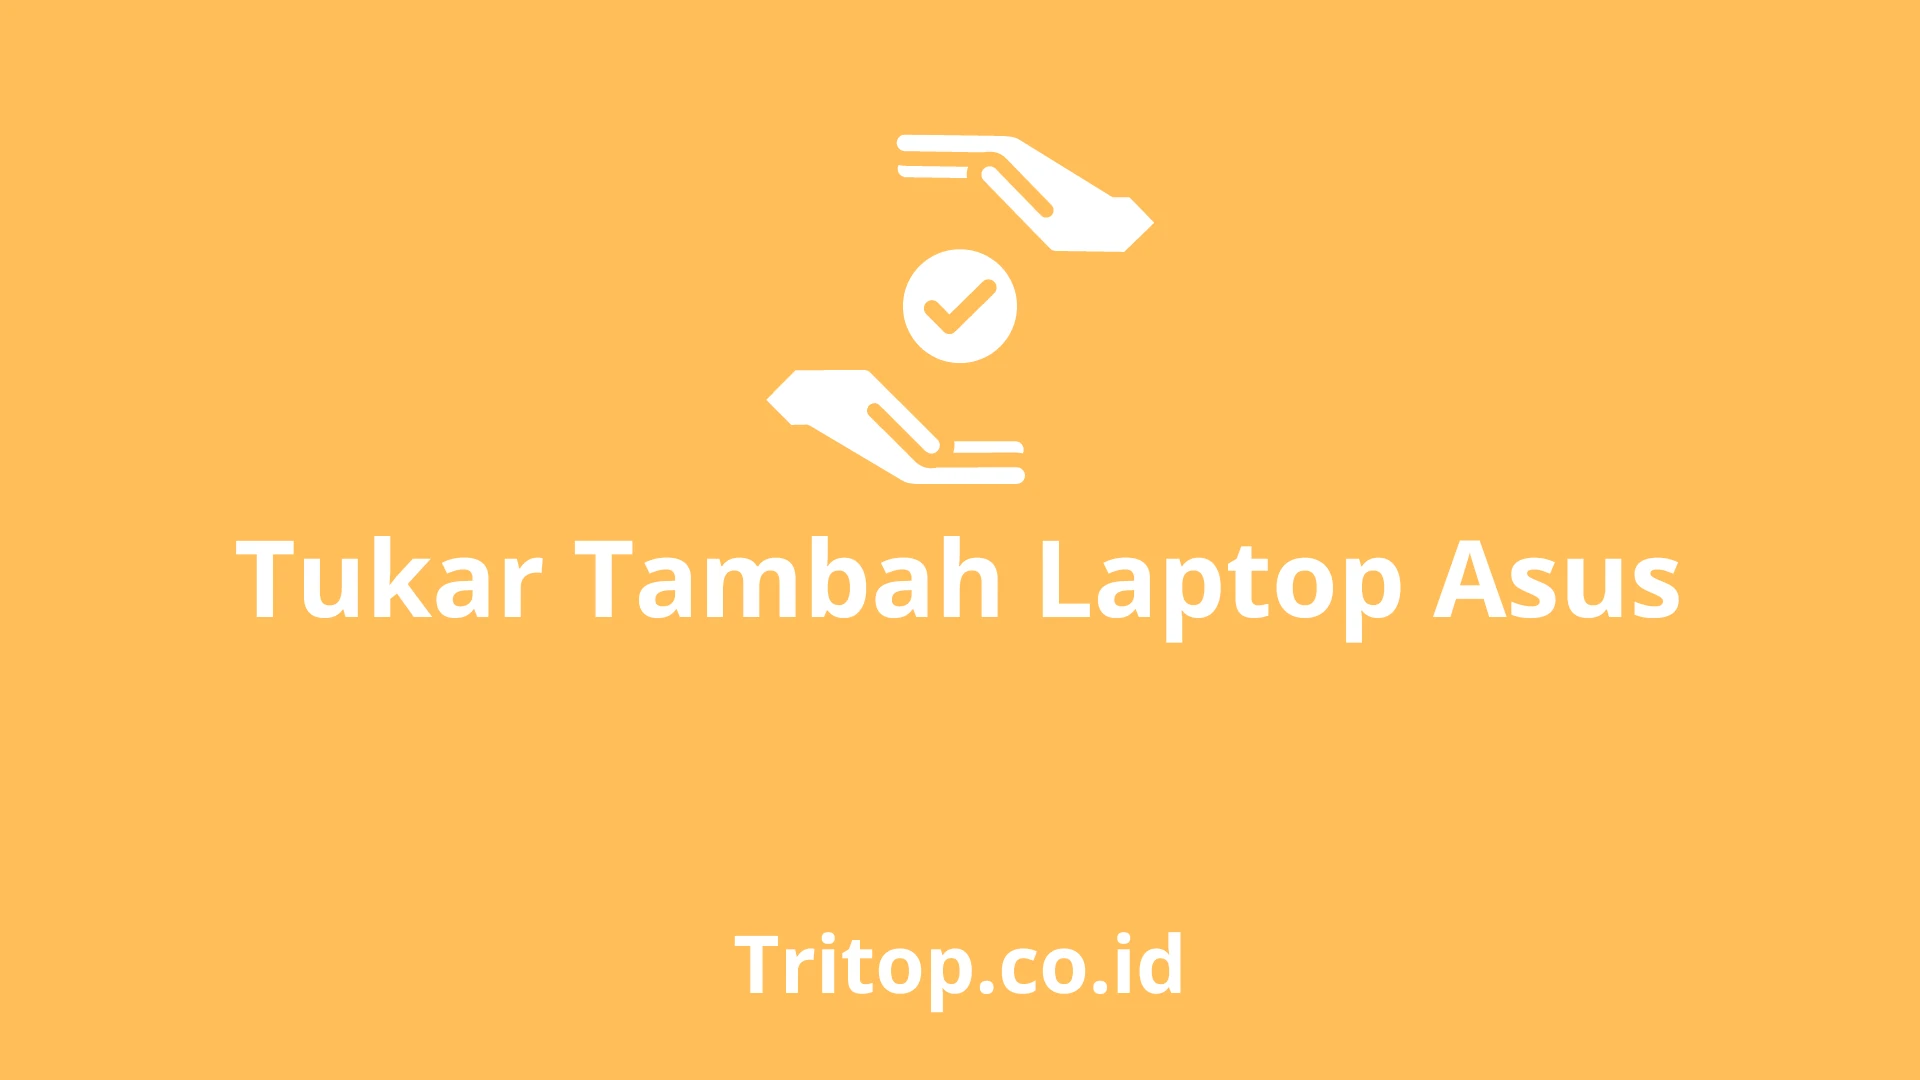 Tukar Tambah Laptop Asus tritop.co.id